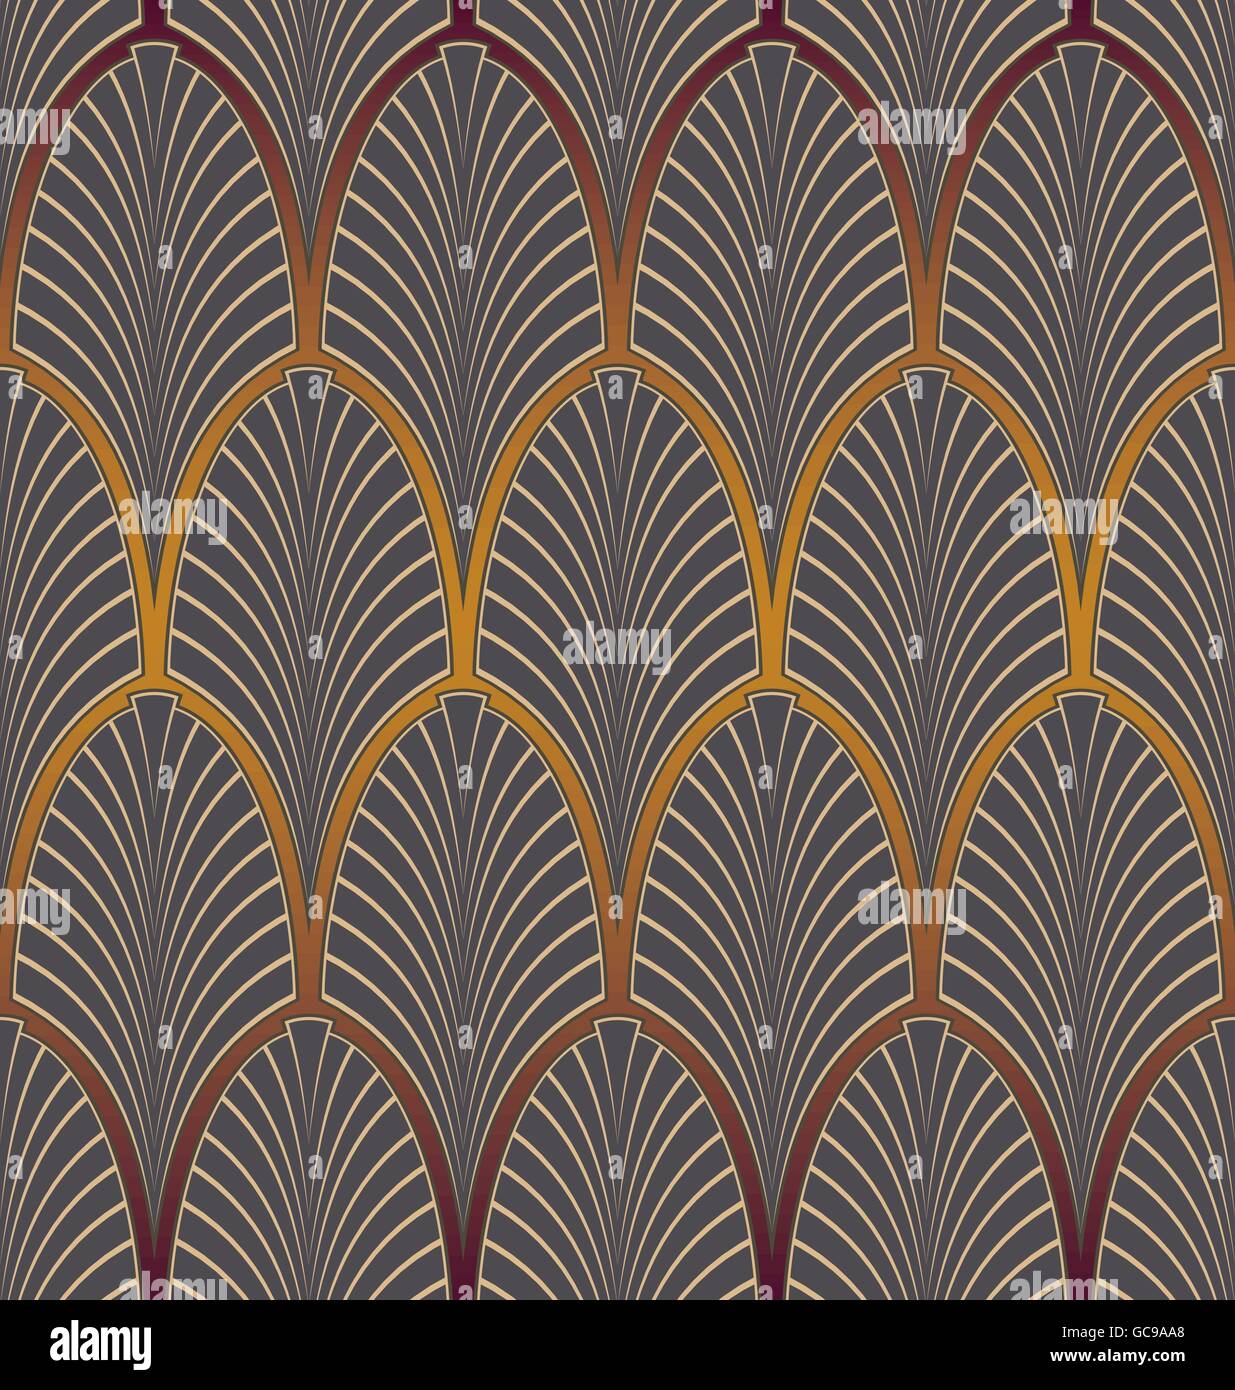 Seamless Art Nouveau pattern Stock Vector